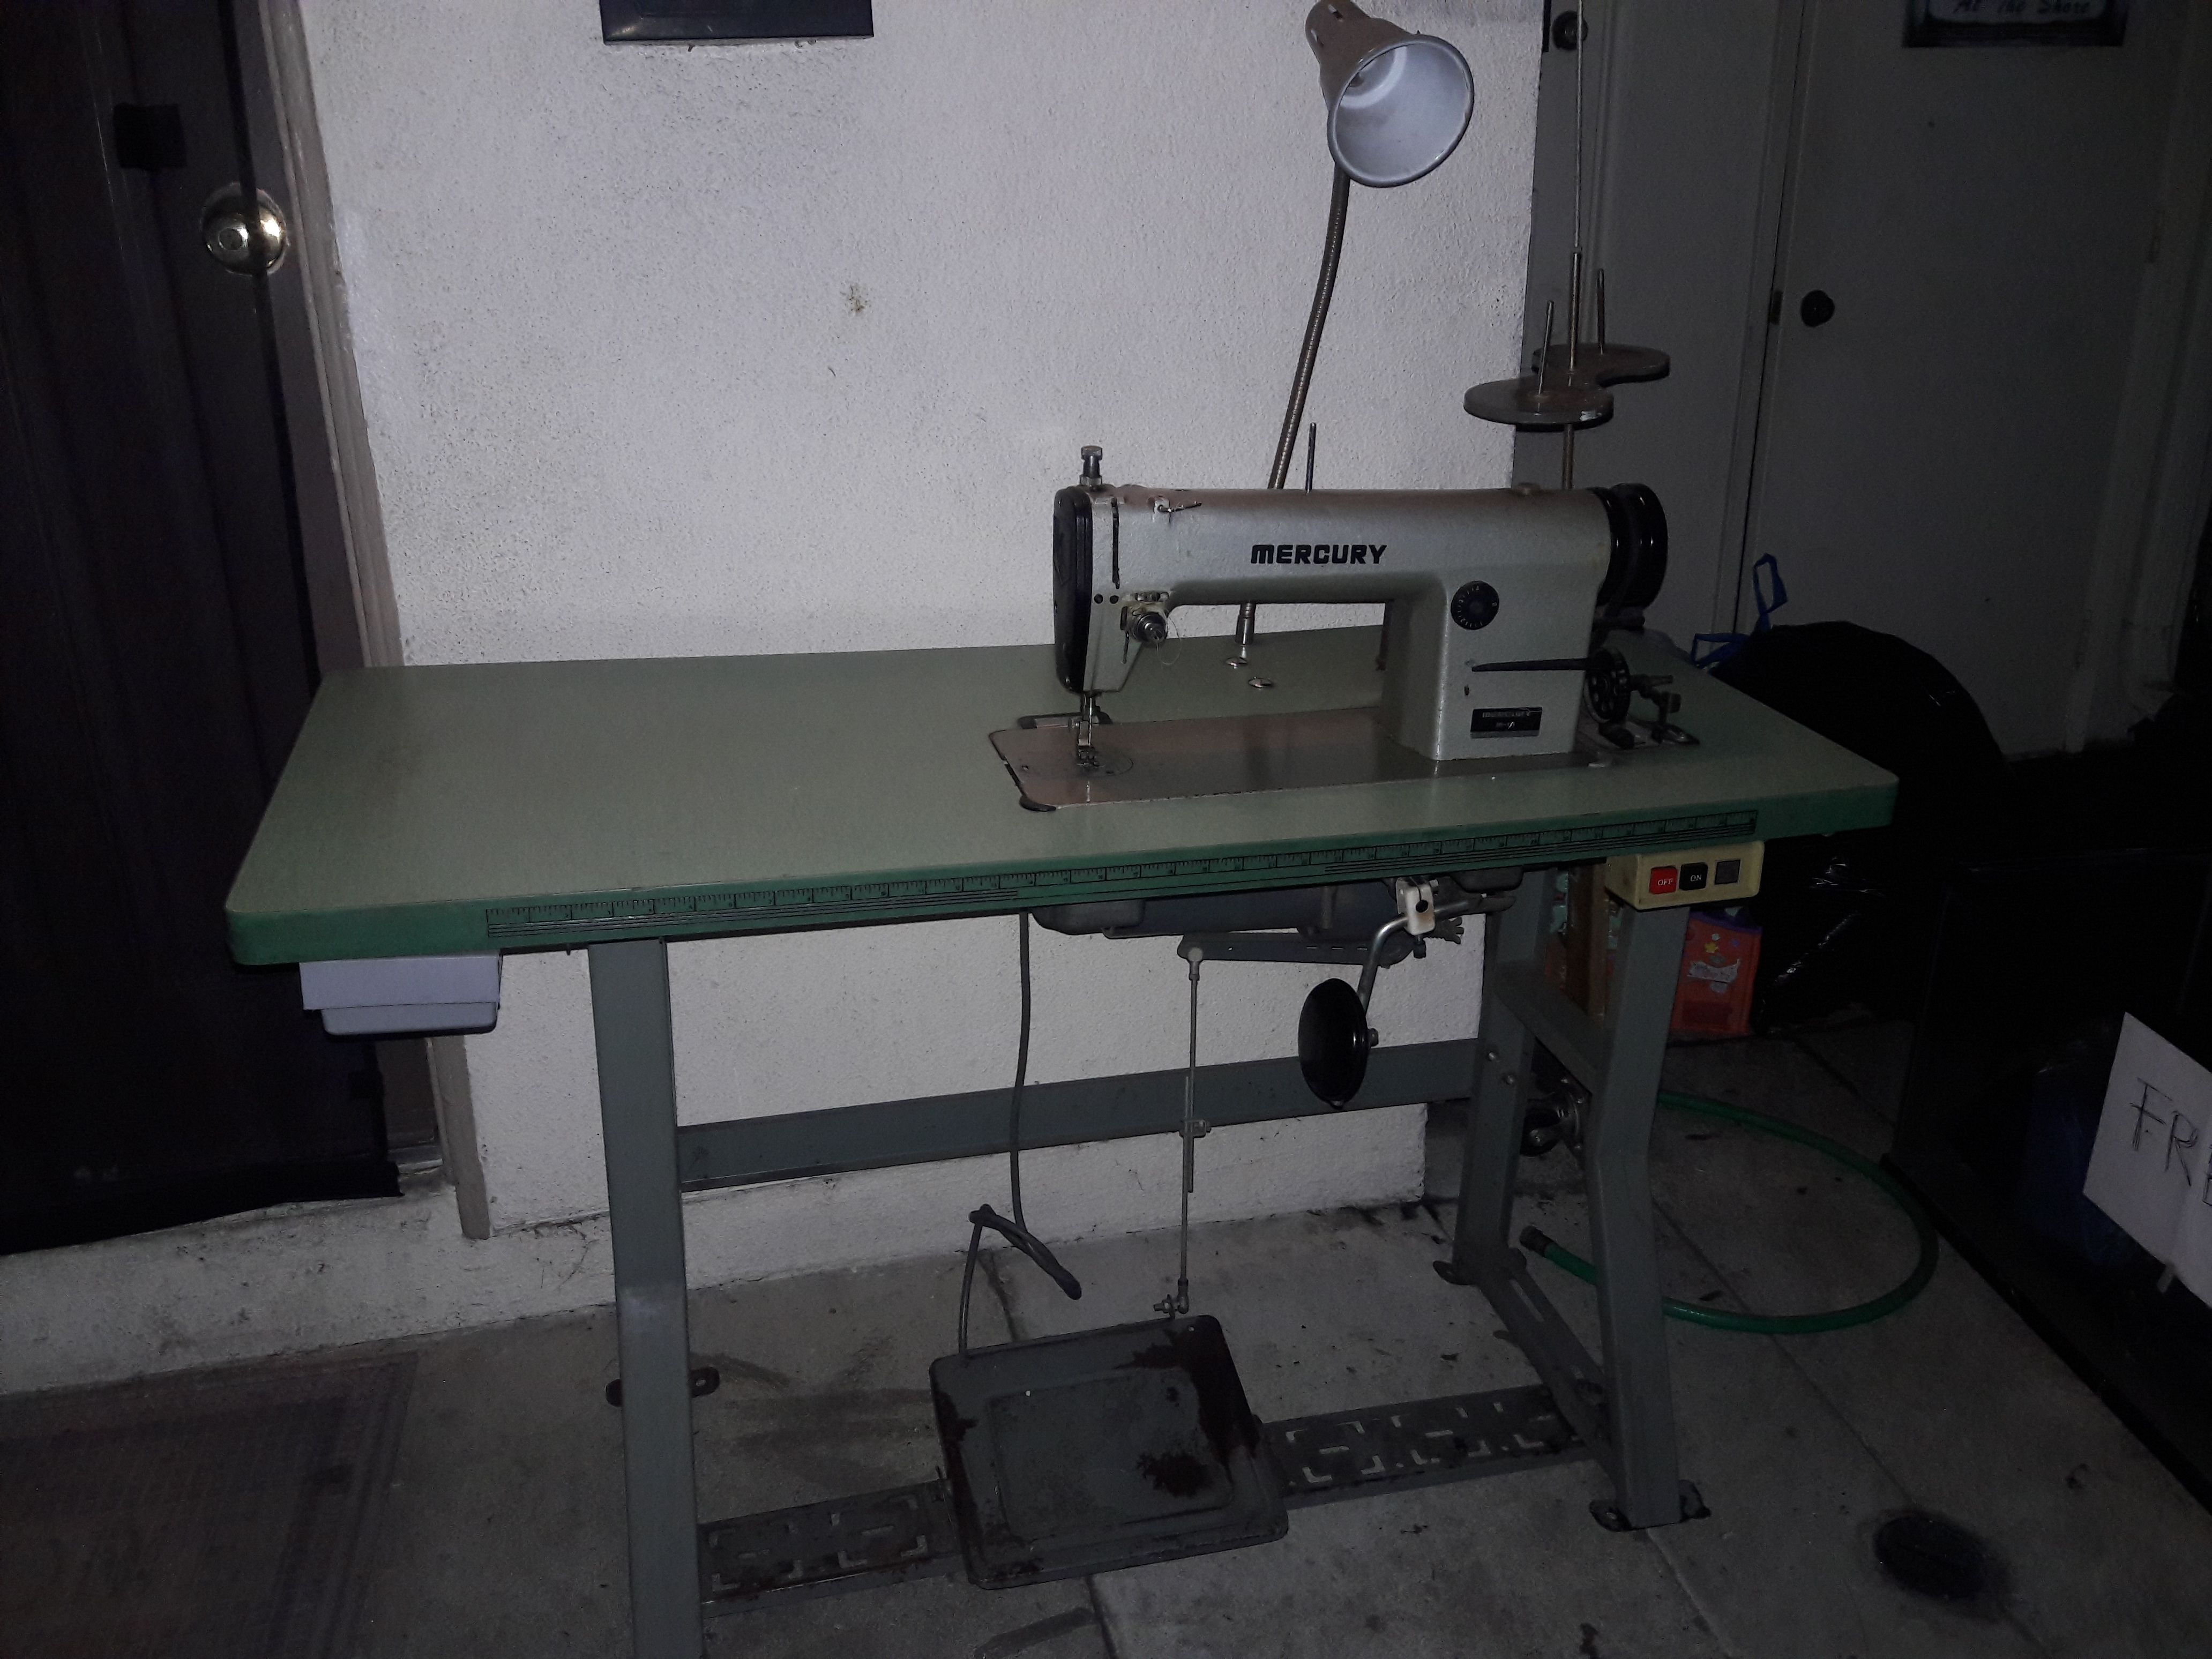 Industrial Mercury M-111 sewing machine